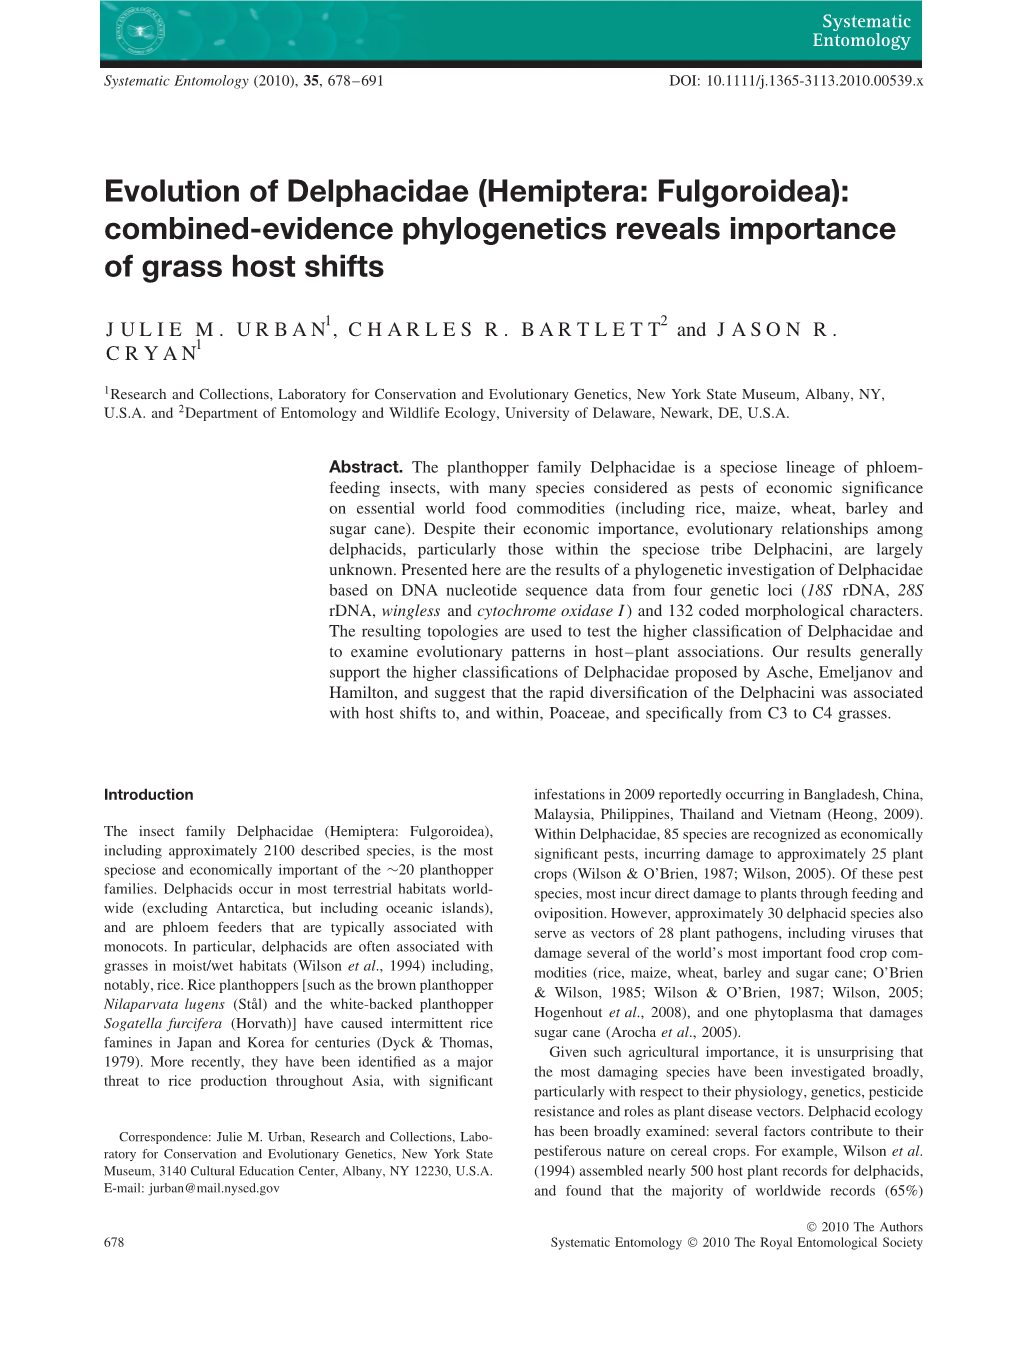 Evolution of Delphacidae (Hemiptera: Fulgoroidea): Combined-Evidence Phylogenetics Reveals Importance of Grass Host Shifts